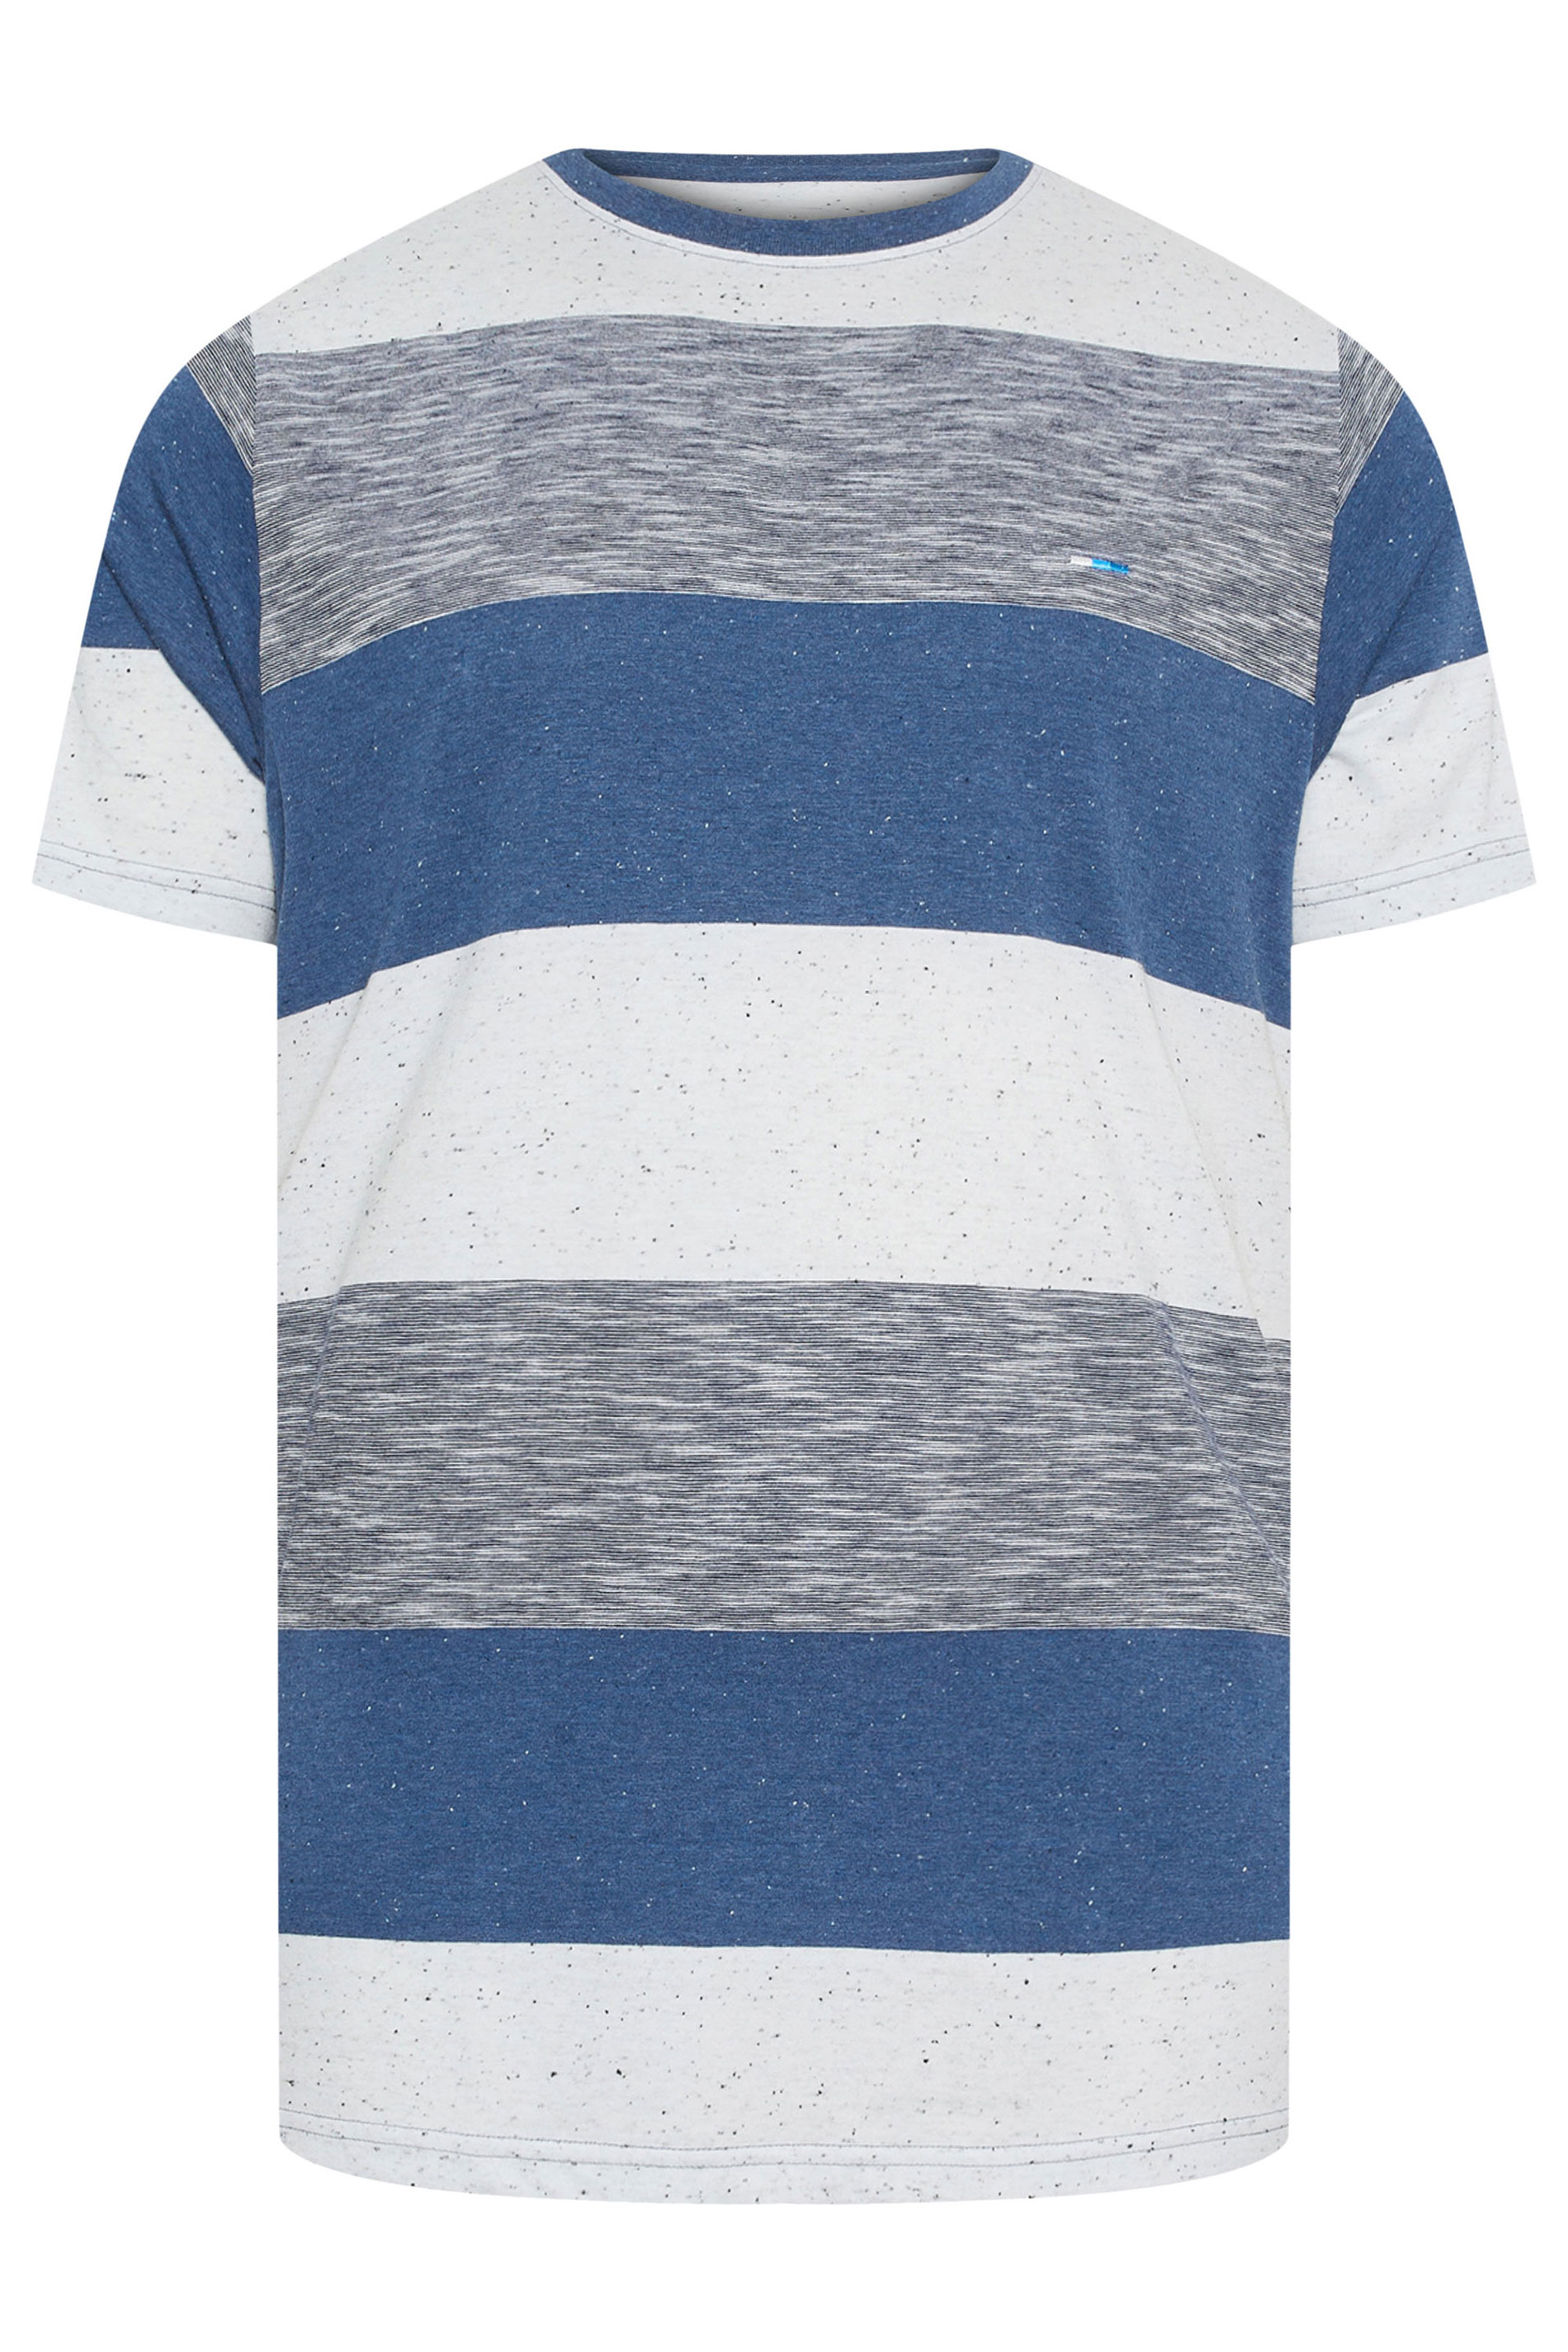 BadRhino Big & Tall Blue Cut & Sew T-Shirt | BadRhino 2